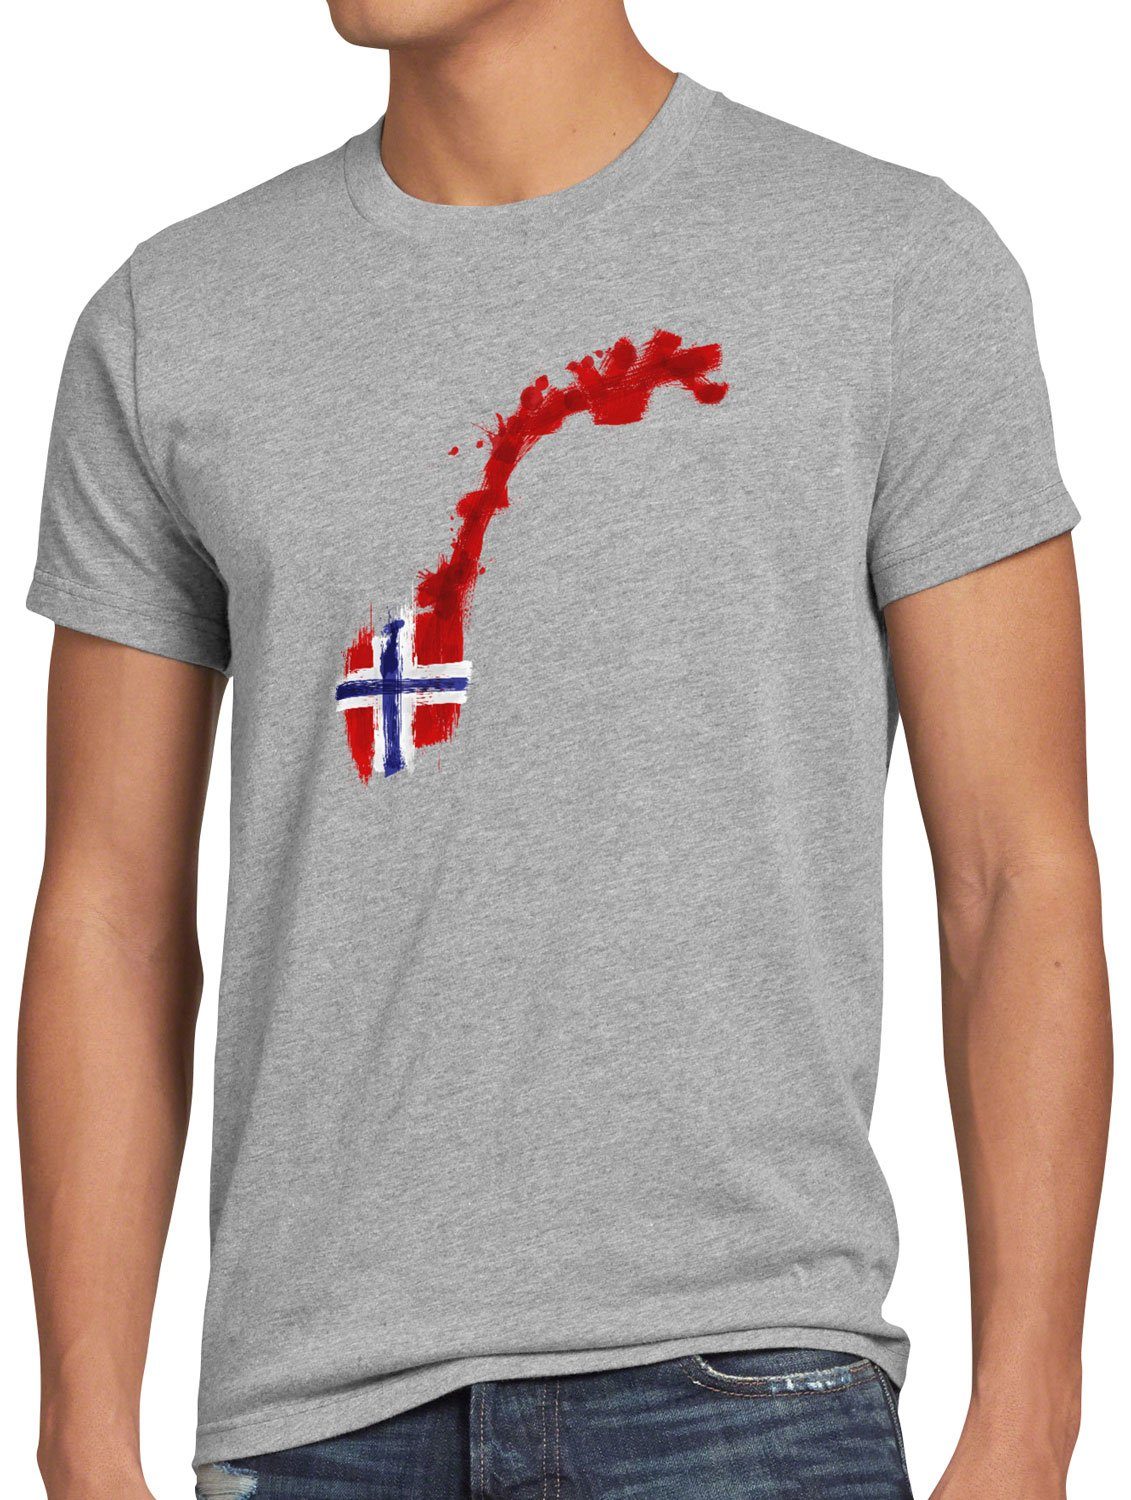 EM Norway Flagge Fahne Fußball meliert Norwegen style3 Herren T-Shirt Print-Shirt Sport grau WM